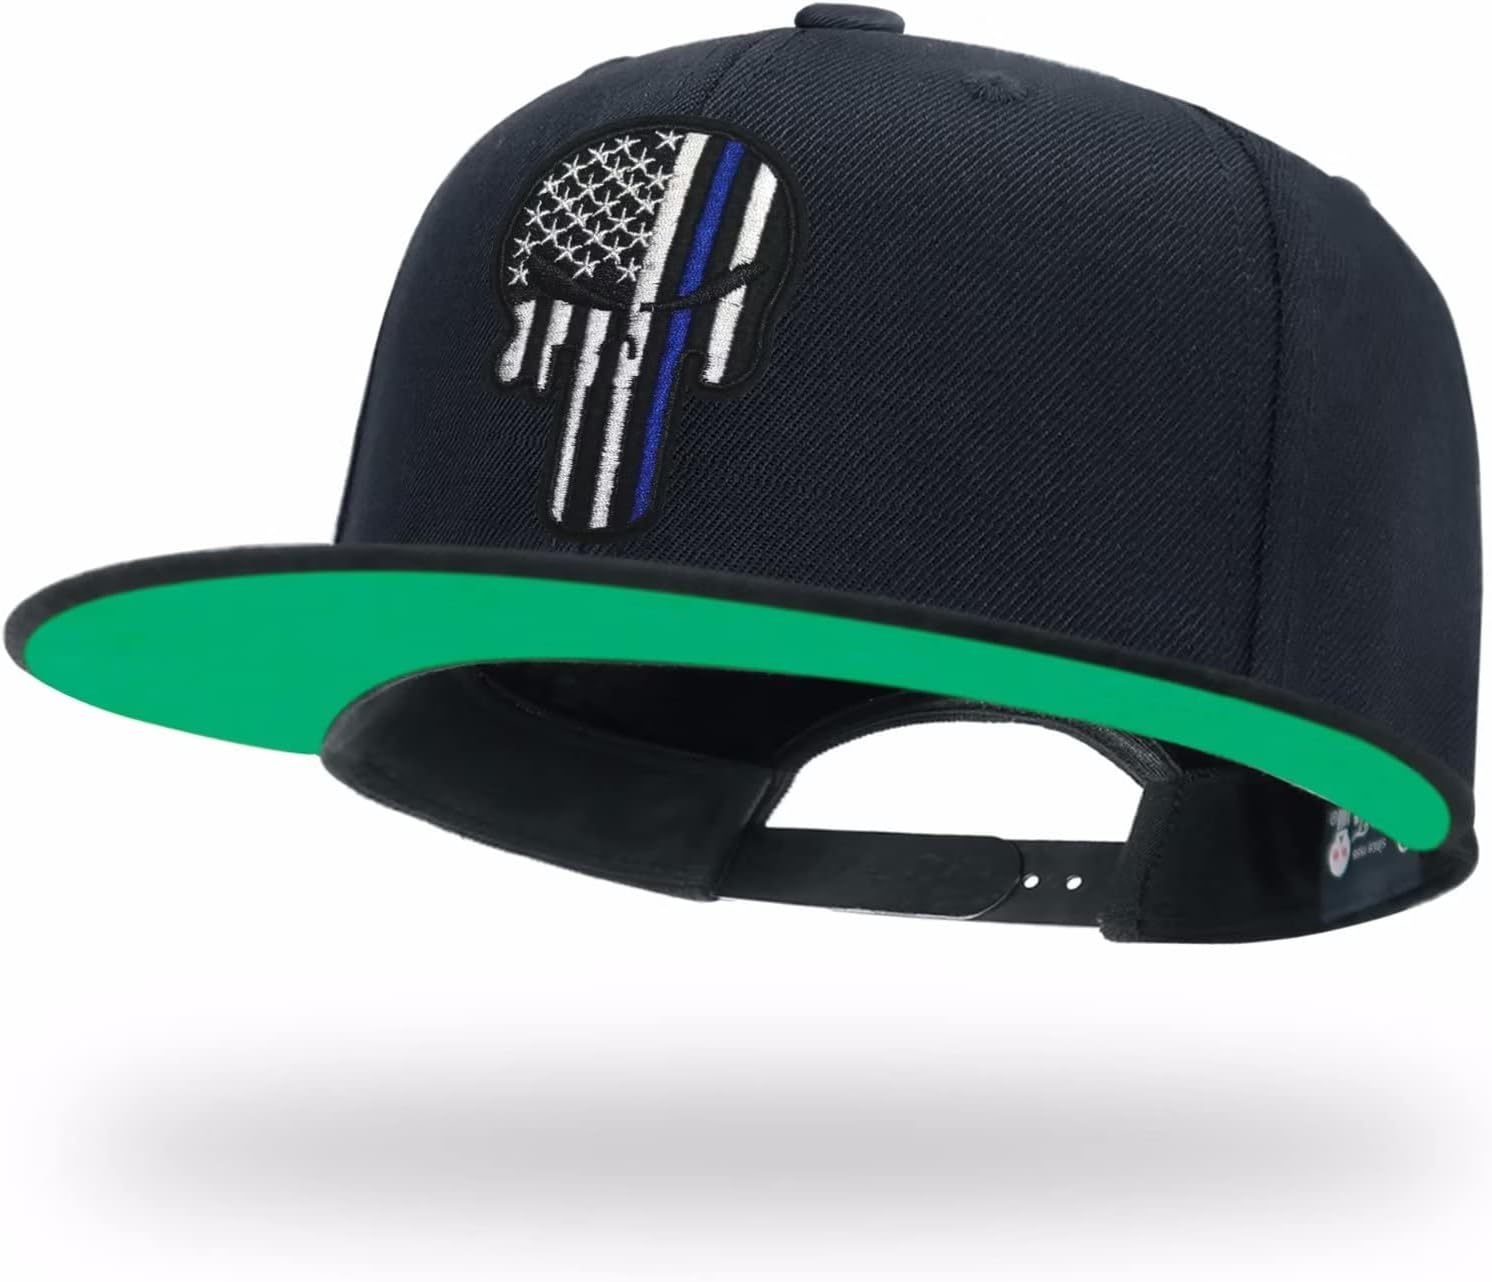 Hats Hatshow Caps – Hat Skull Embroidery Baseball tilgomedal Flat Unisex for Bill Solid Adjustable Snapback Men